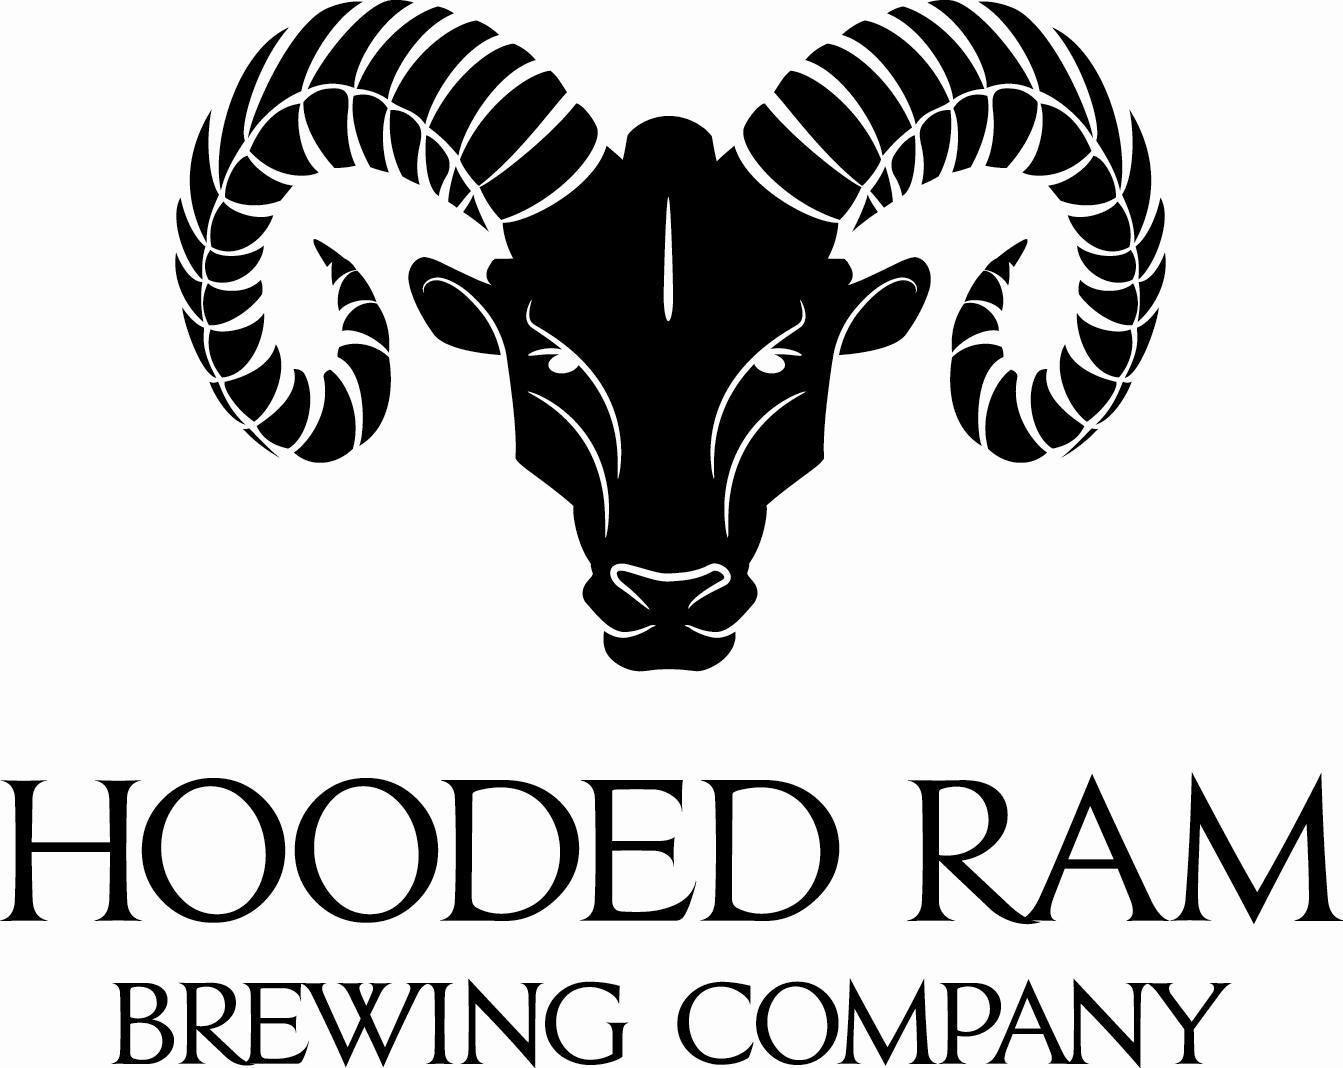 Ram Animal Logo - Mobile Real Ale in Douglas - Hooded Ram